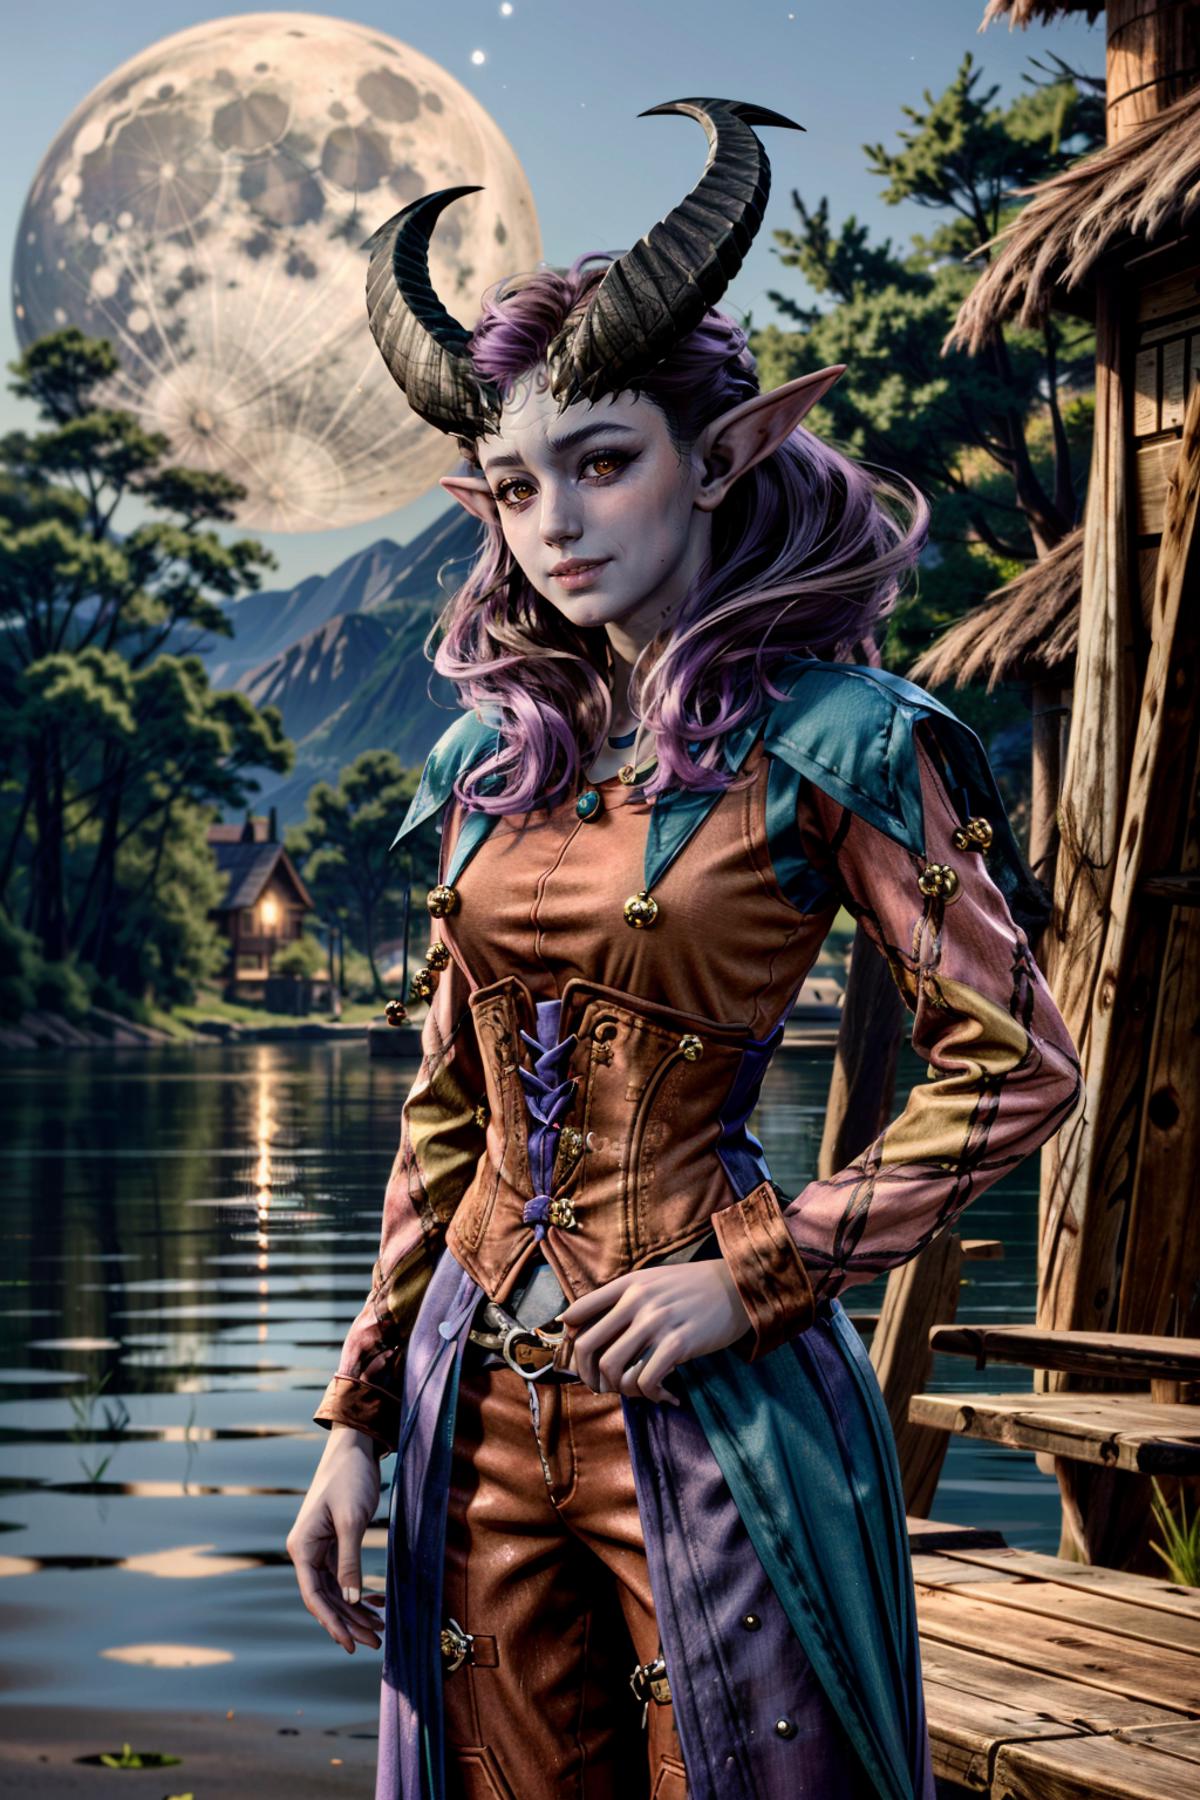 Alfira from Baldur's Gate 3 image by BloodRedKittie